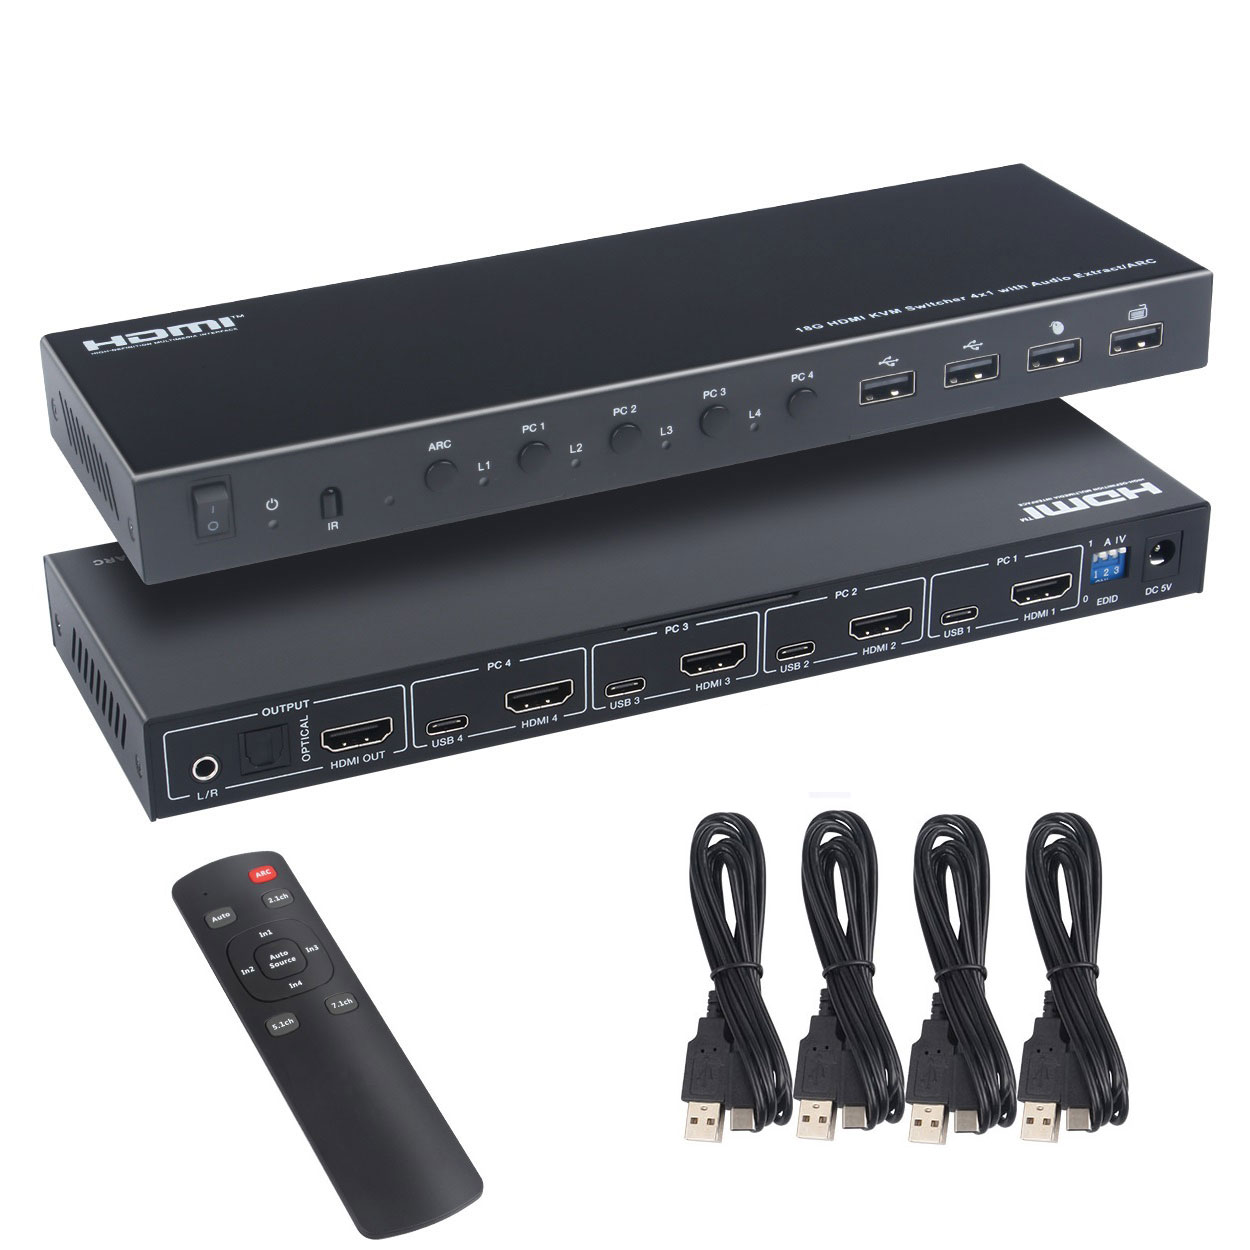 ES-Tune KVM切替器 4入力1出力 HDMI音声分離 4K60HZ HDR USB切替器 4入力4出力 USBハブ 手動切替 タイプC端子採用 USB2.0 USBケーブル付属 KVMスイッチ 光デジタル アナログ 日本語取扱説明書付